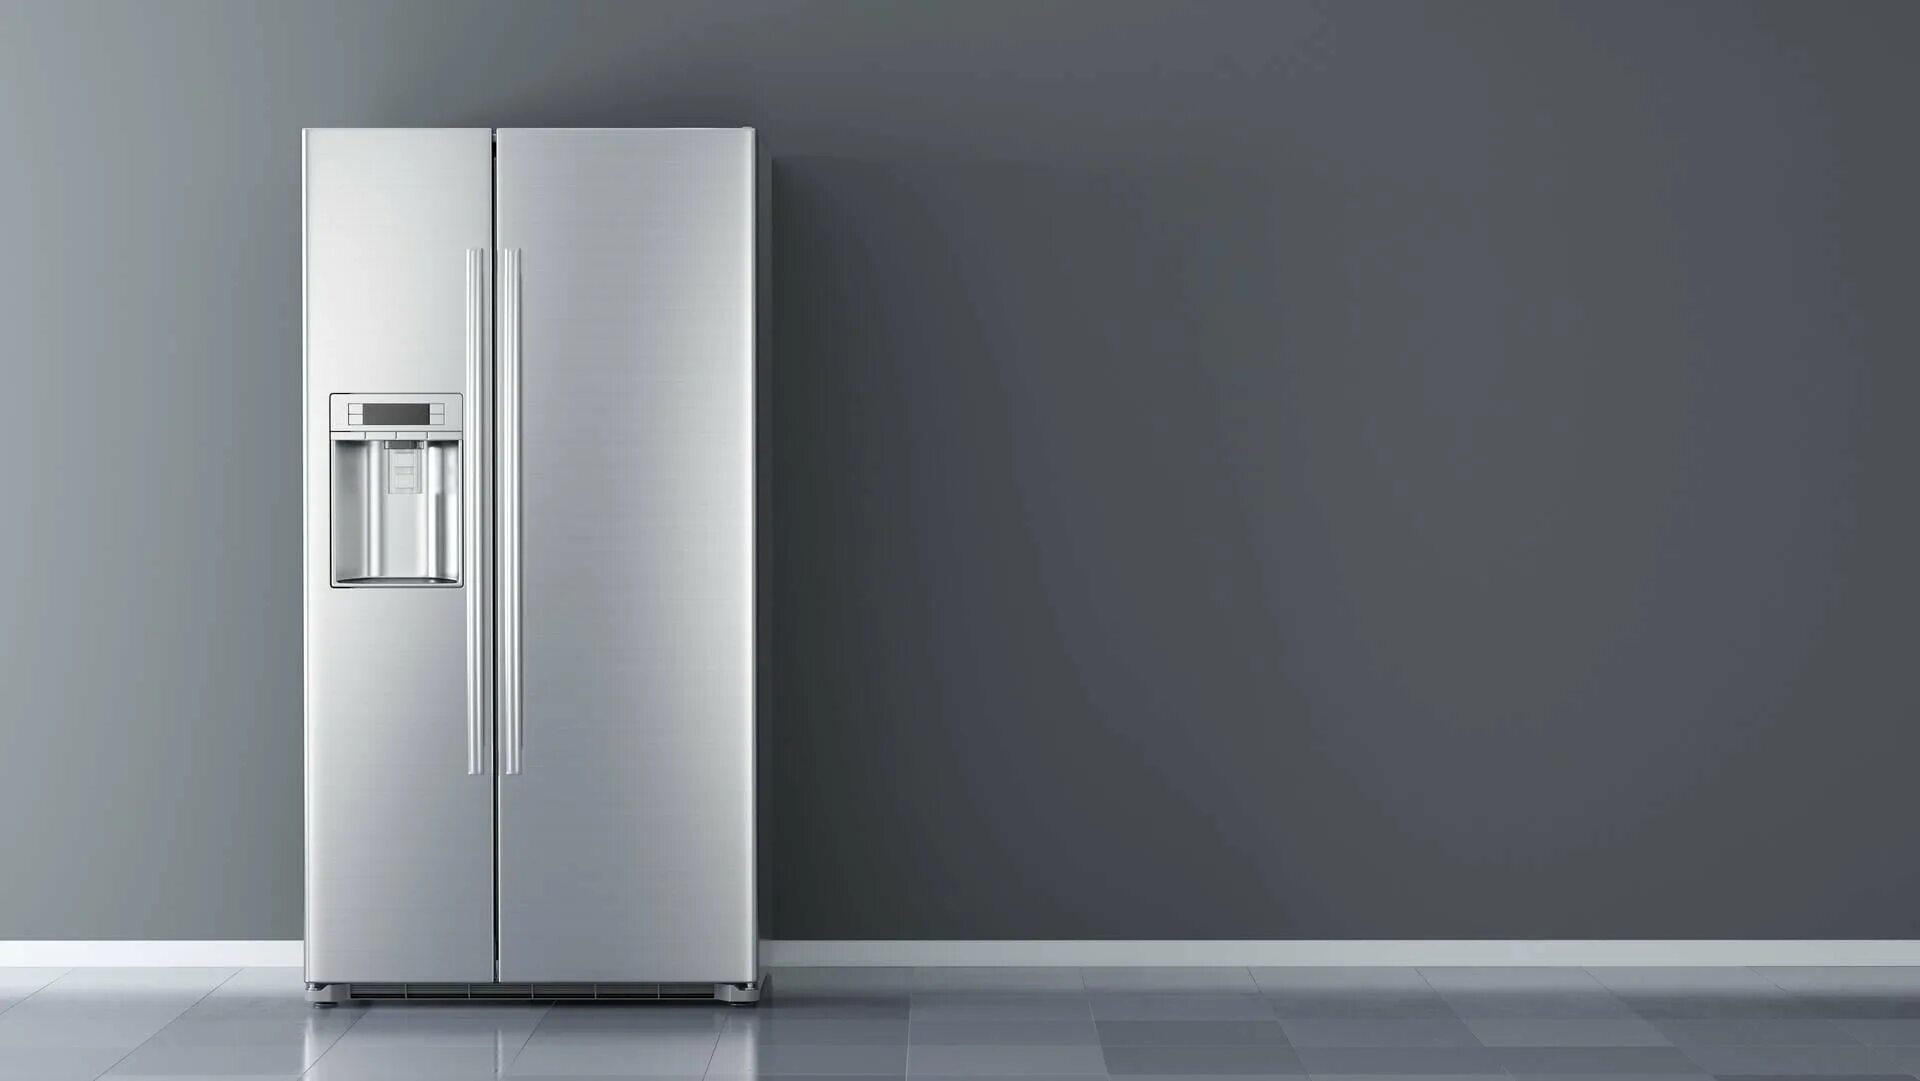 Сток холодильника. Холодильник (Side-by-Side) Smeg fq60cpo. Холодильник (Side-by-Side) Ascoli acdb520wib. Холодильник (Side-by-Side) Haier HRF-521dm6ru. Холодильник Smeg Side by Side.